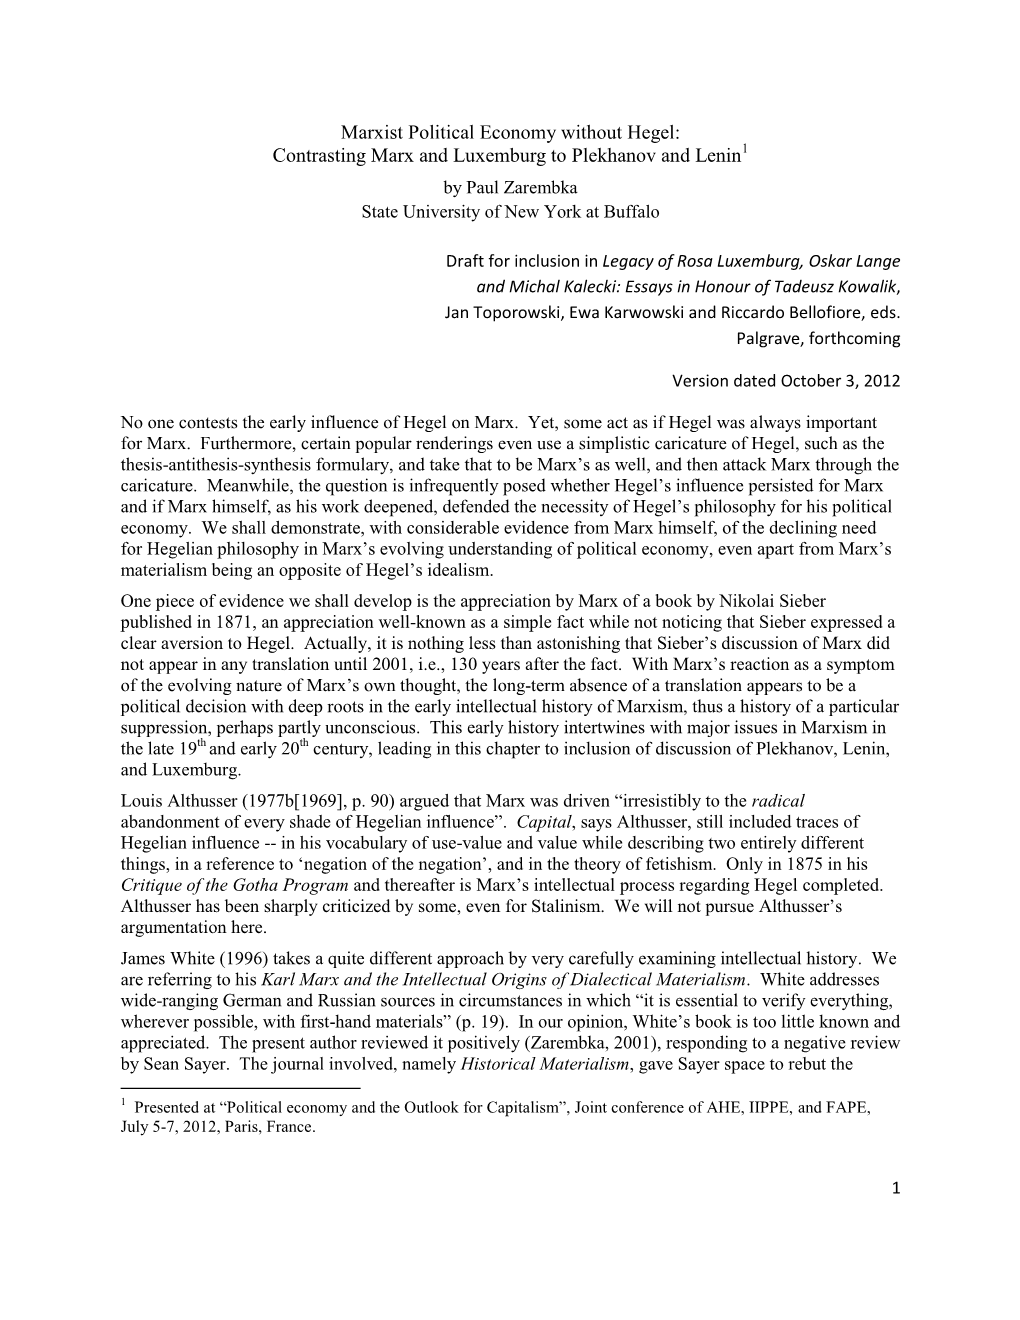 Marxist Political Economy Without Hegel: Contrasting Marx and Luxemburg to Plekhanov and Lenin1 by Paul Zarembka State University of New York at Buffalo